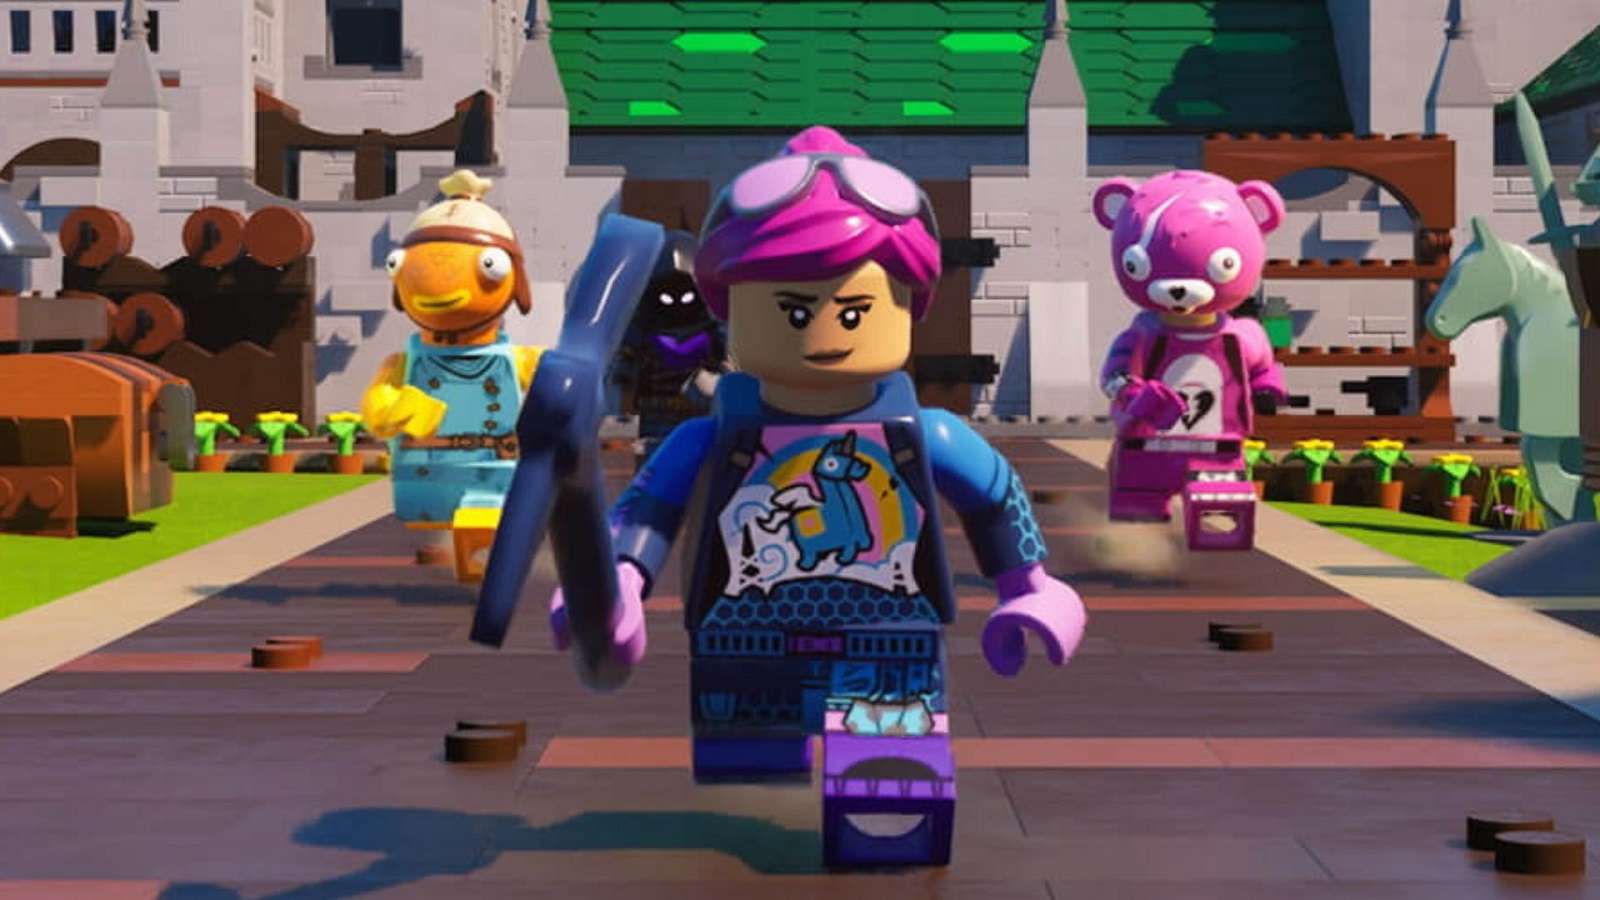 LEGO Fortnite characters running